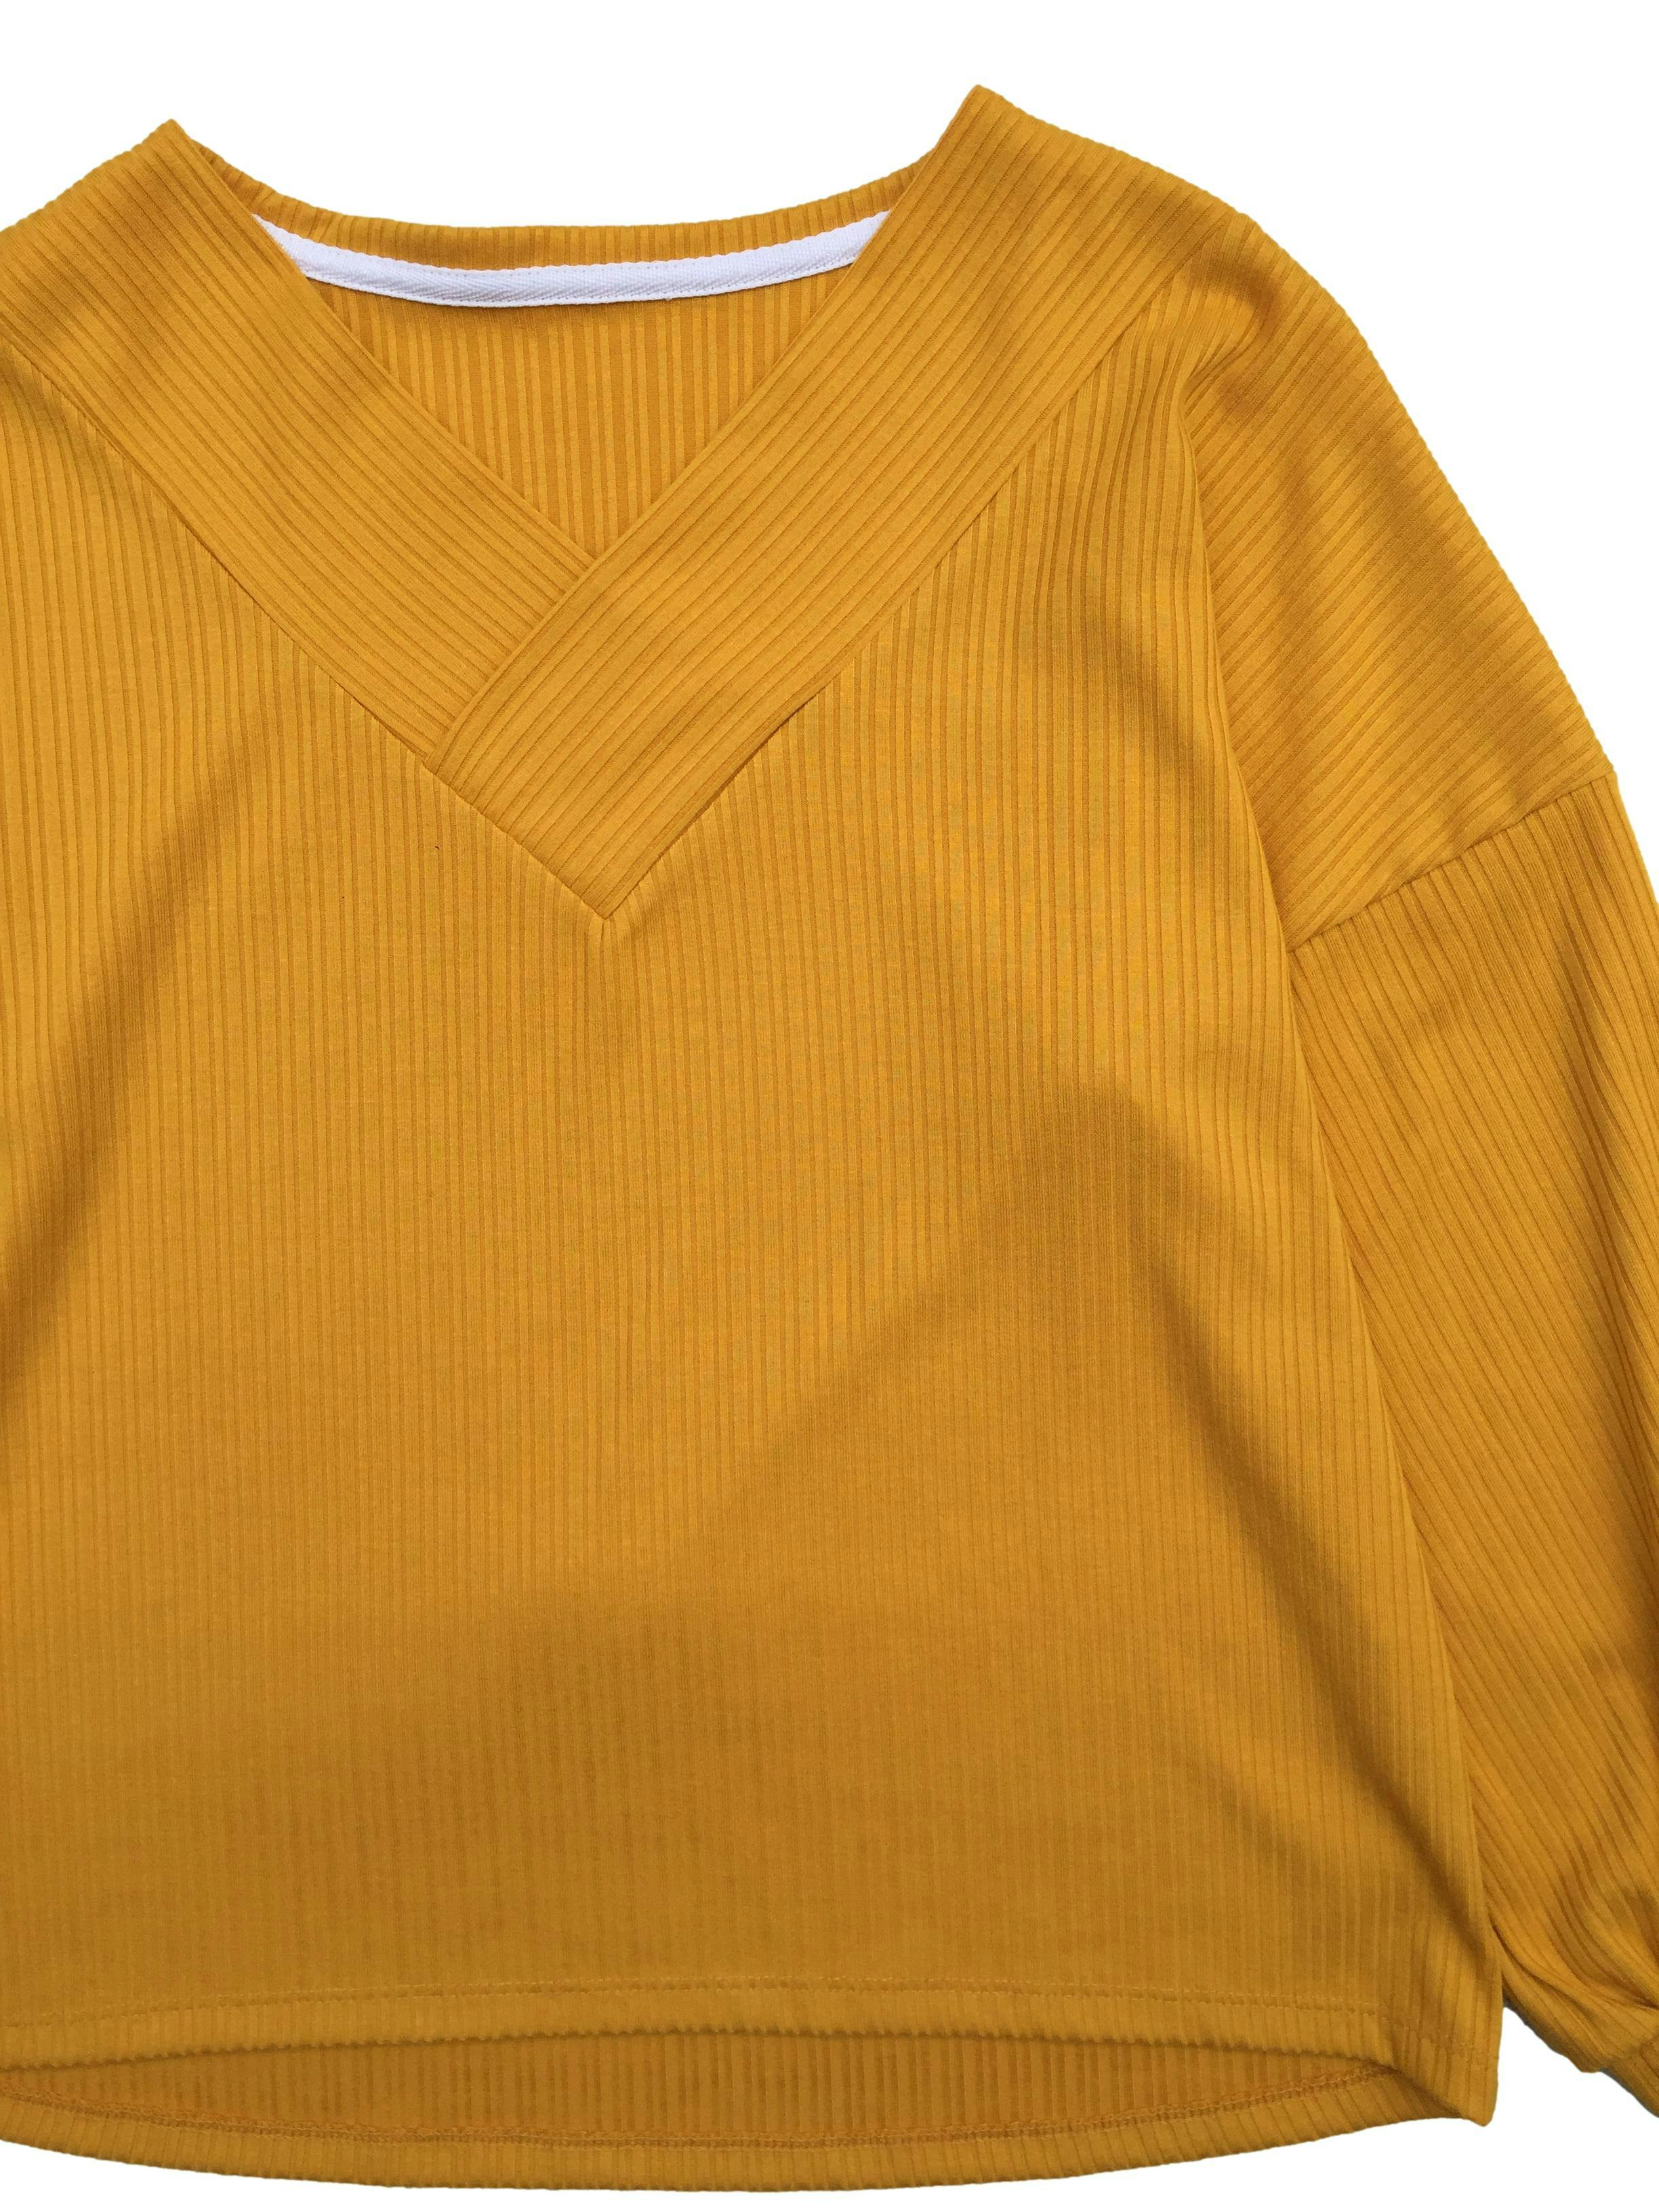 Blusa amarilla acanalada, manga anchas. Busto: 104cm, Largo: 53cm